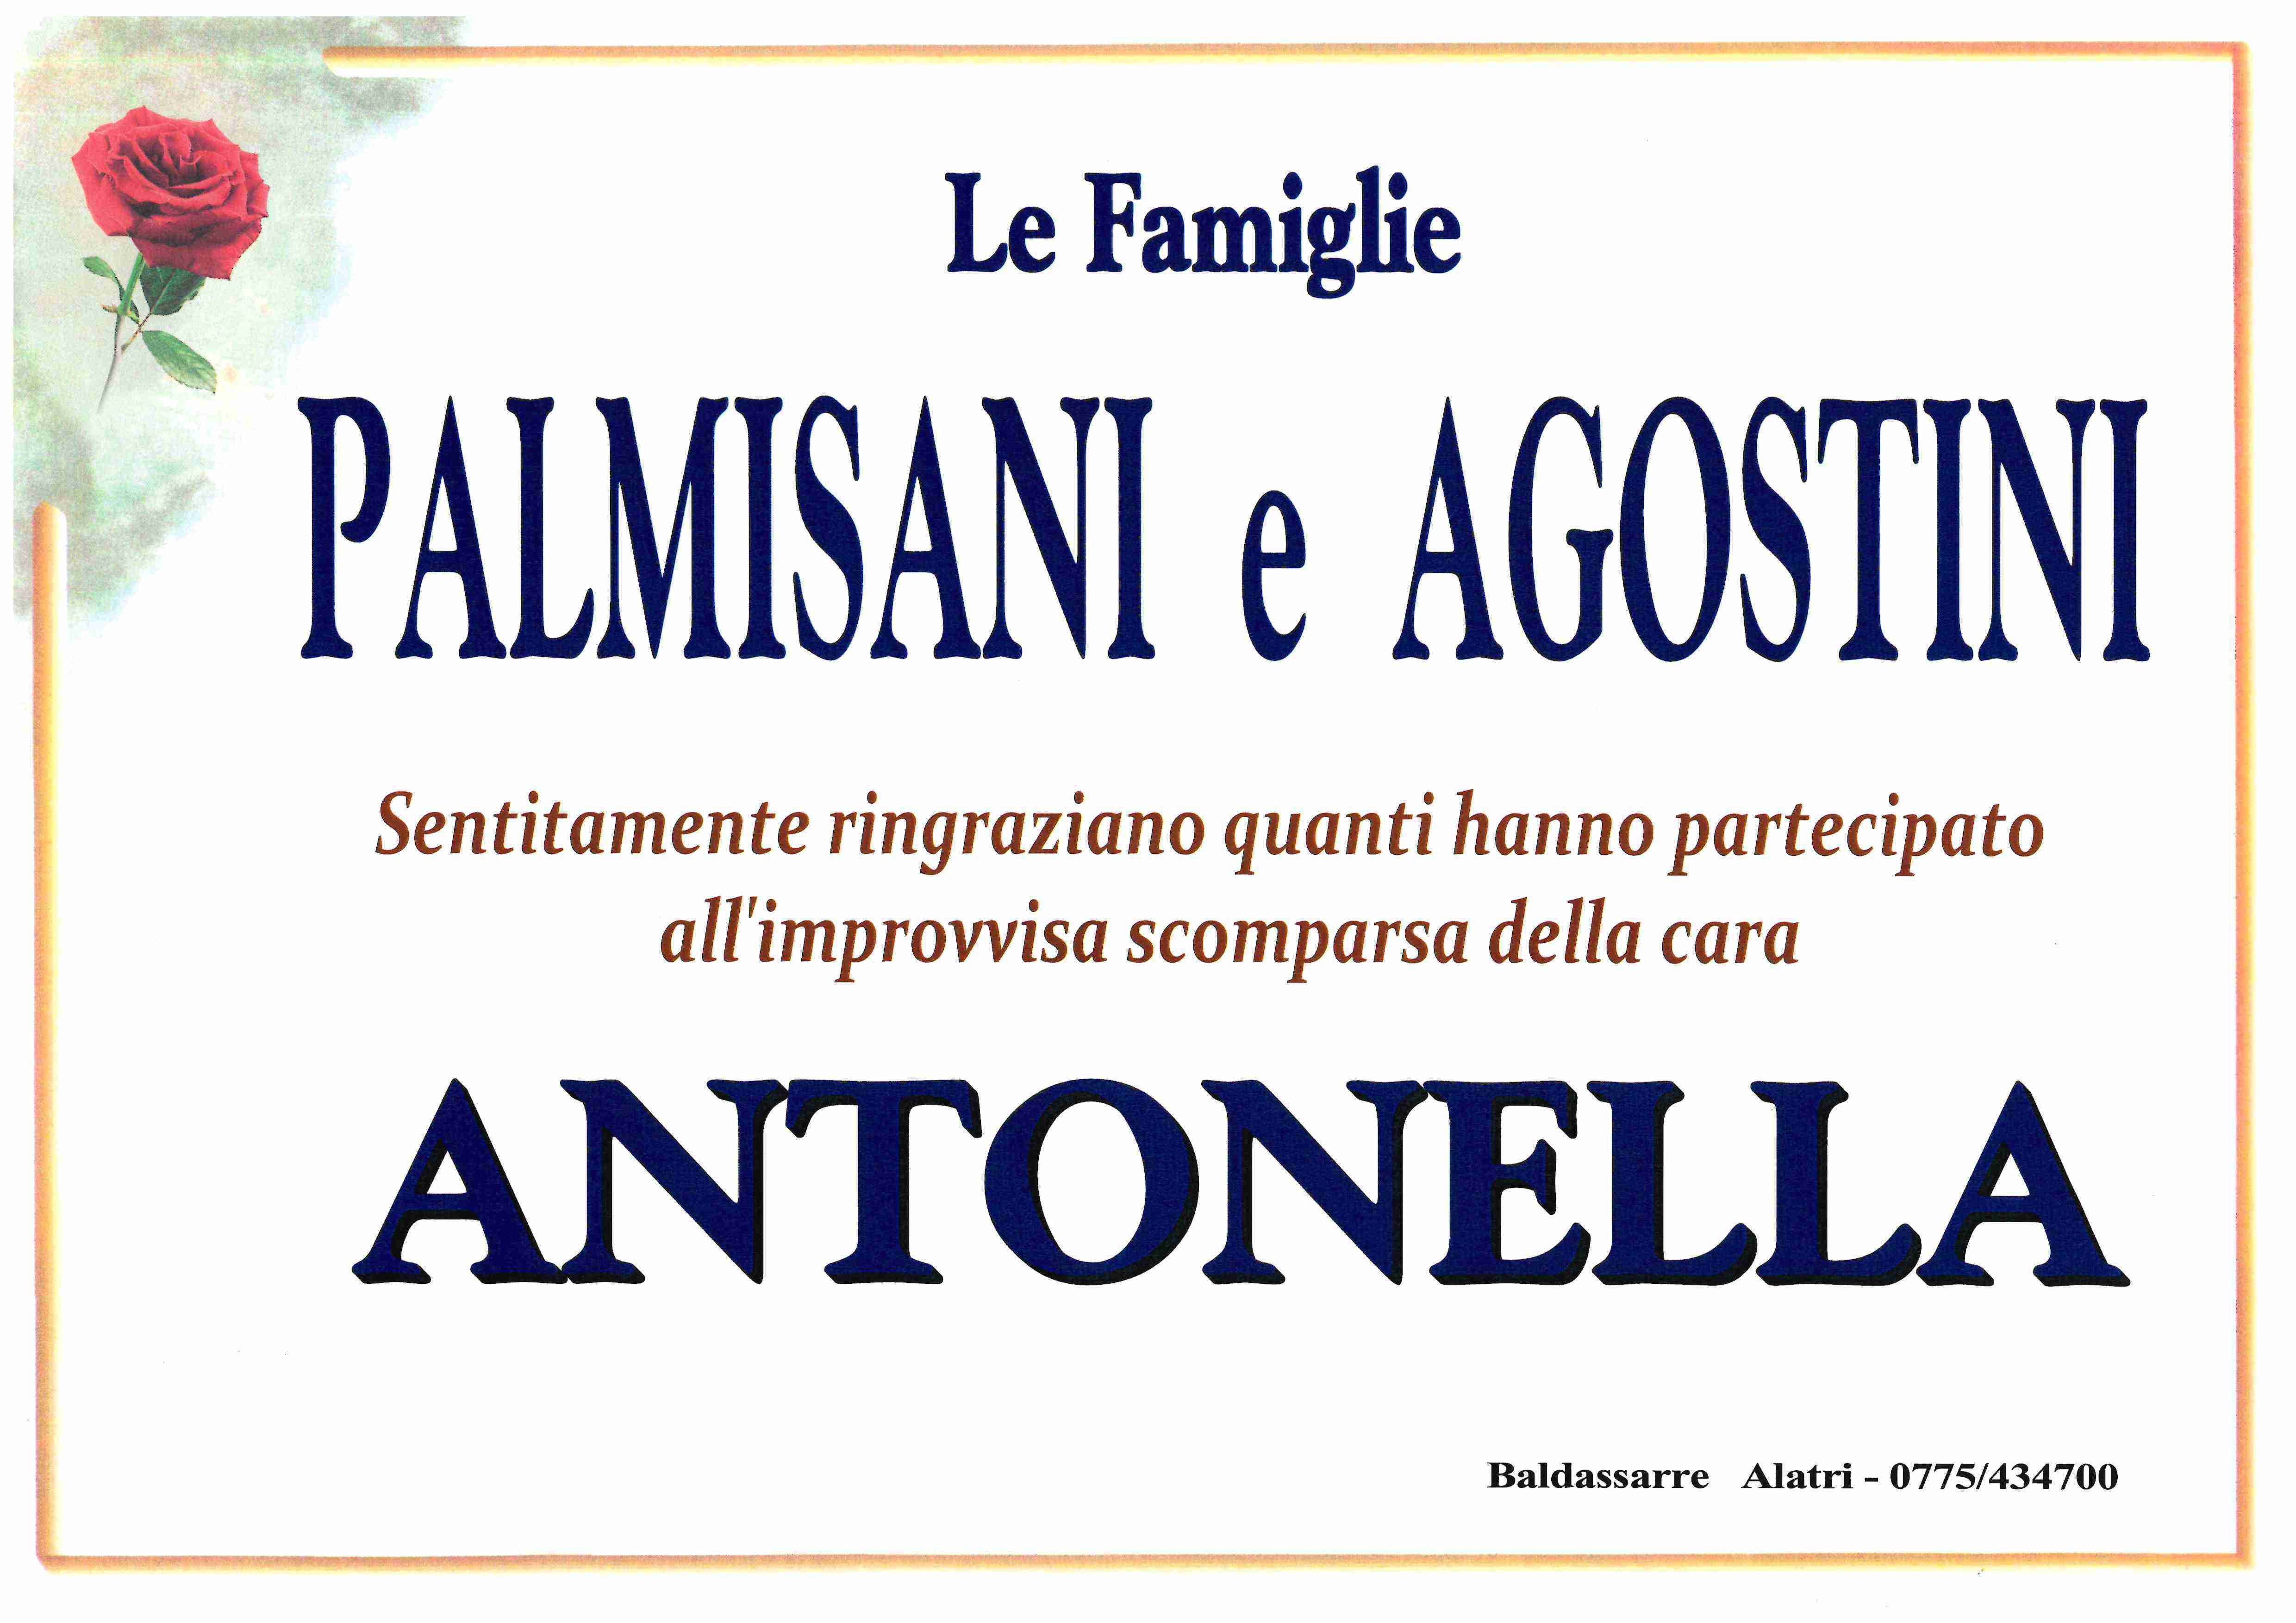 Antonella Agostini